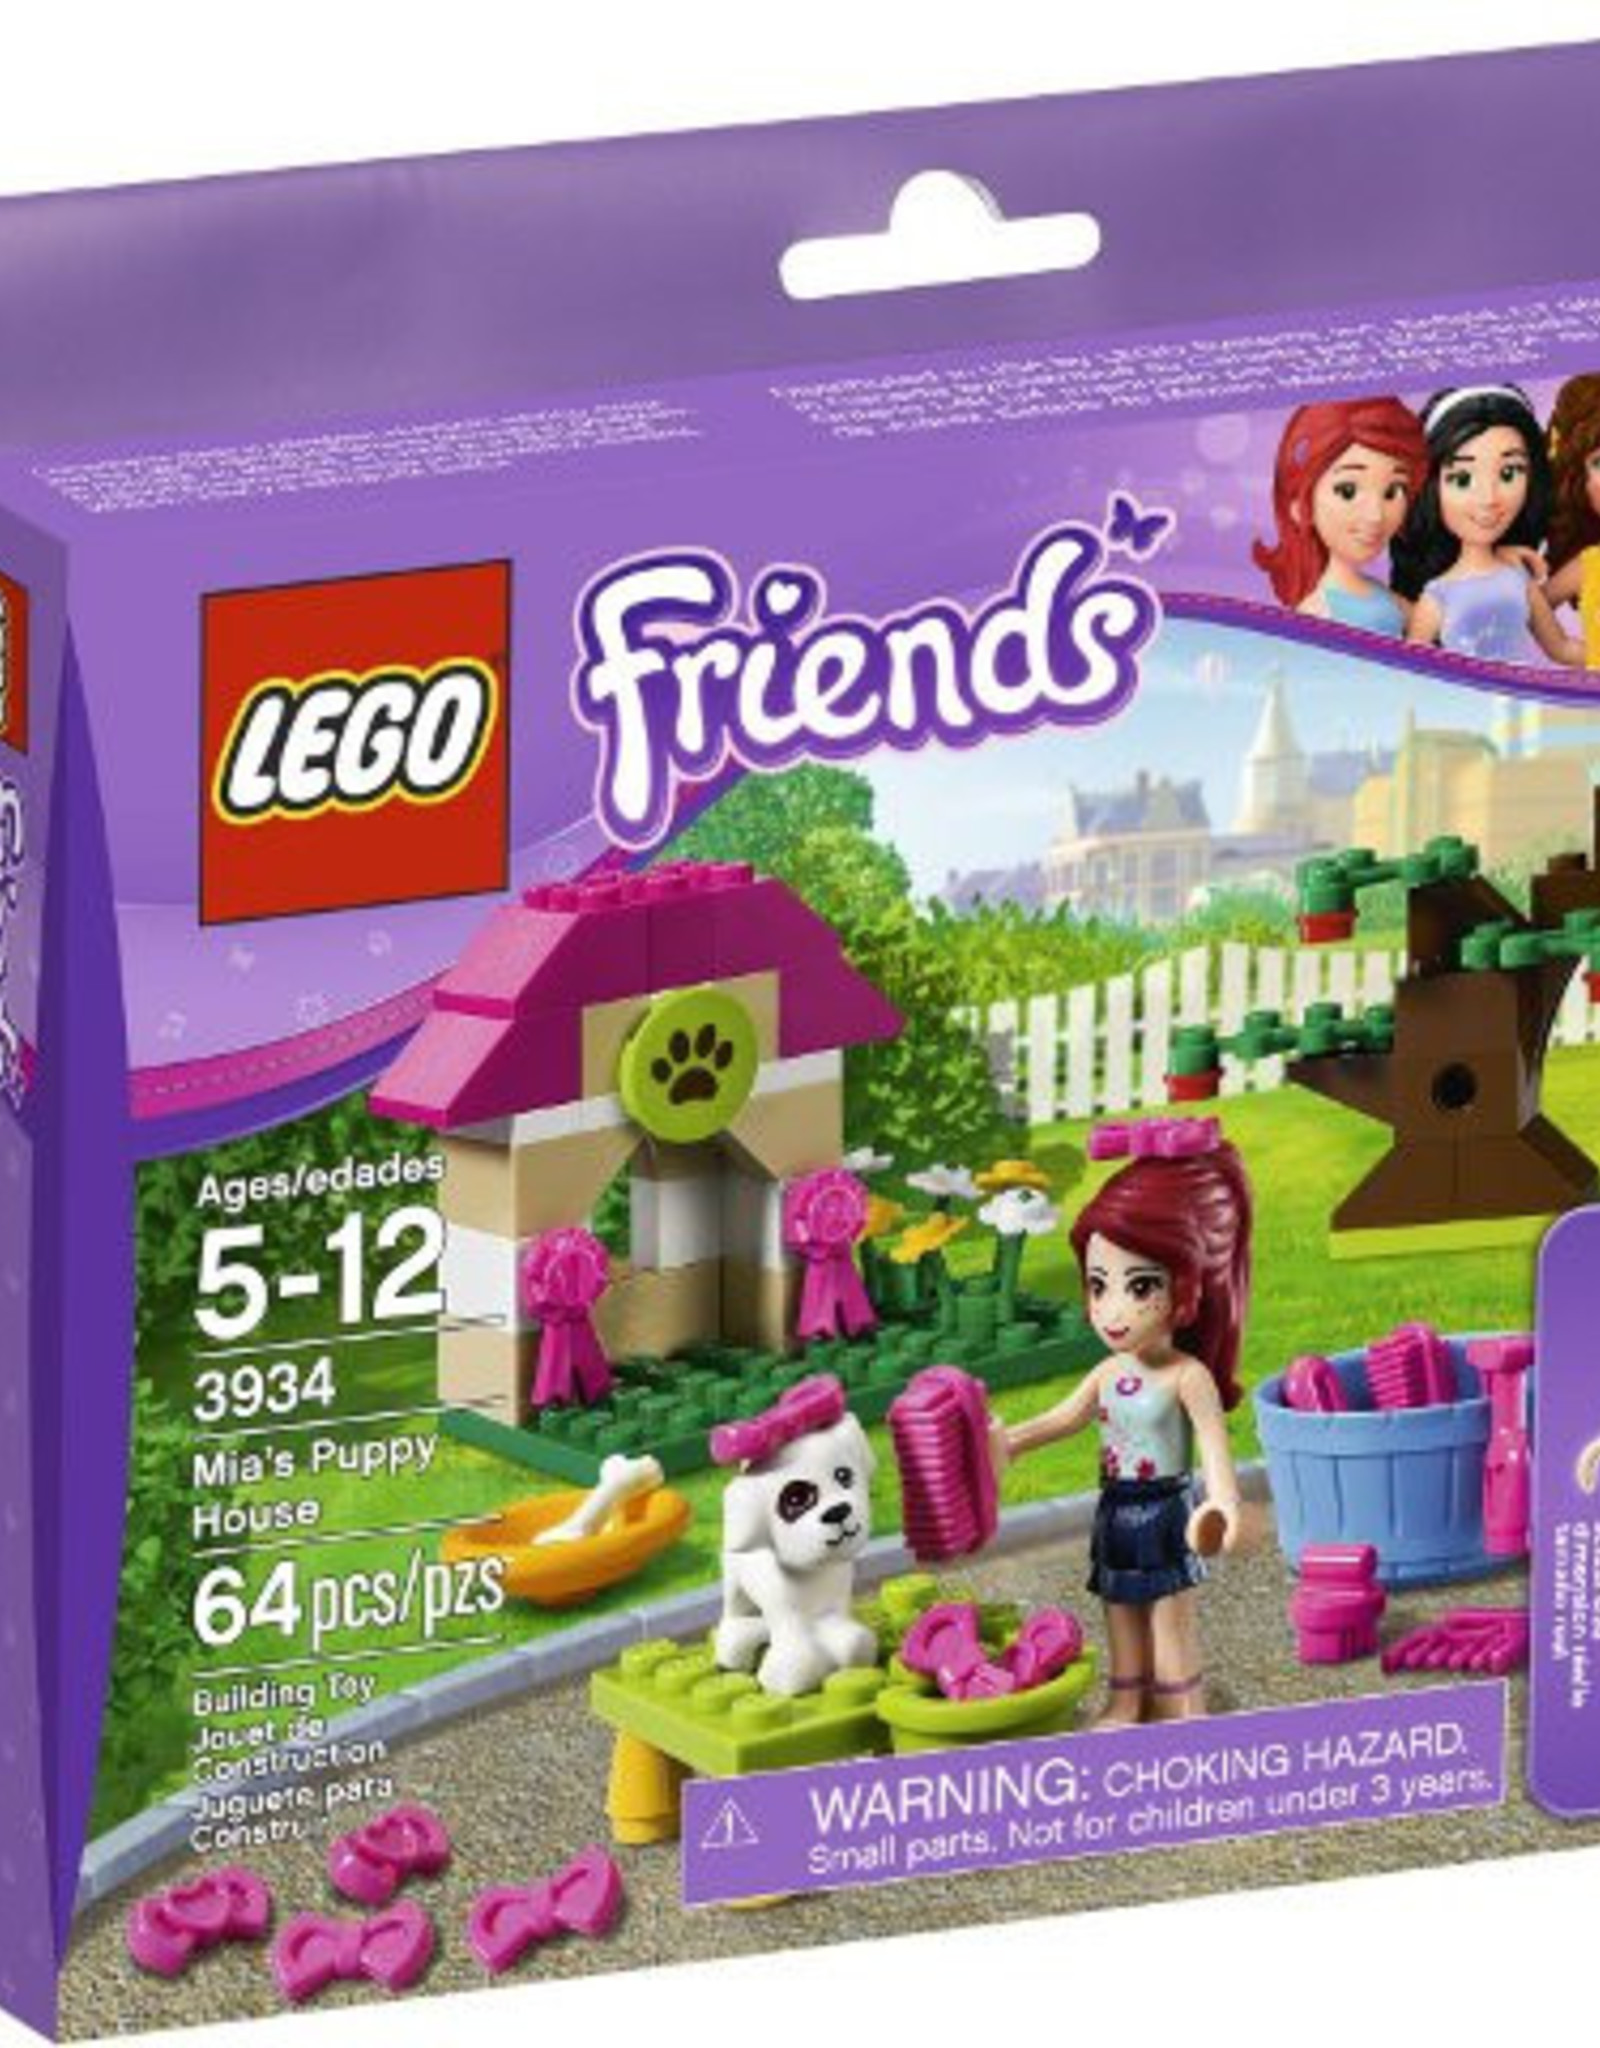 LEGO LEGO 3934 Mia’s Puppy House FRIENDS